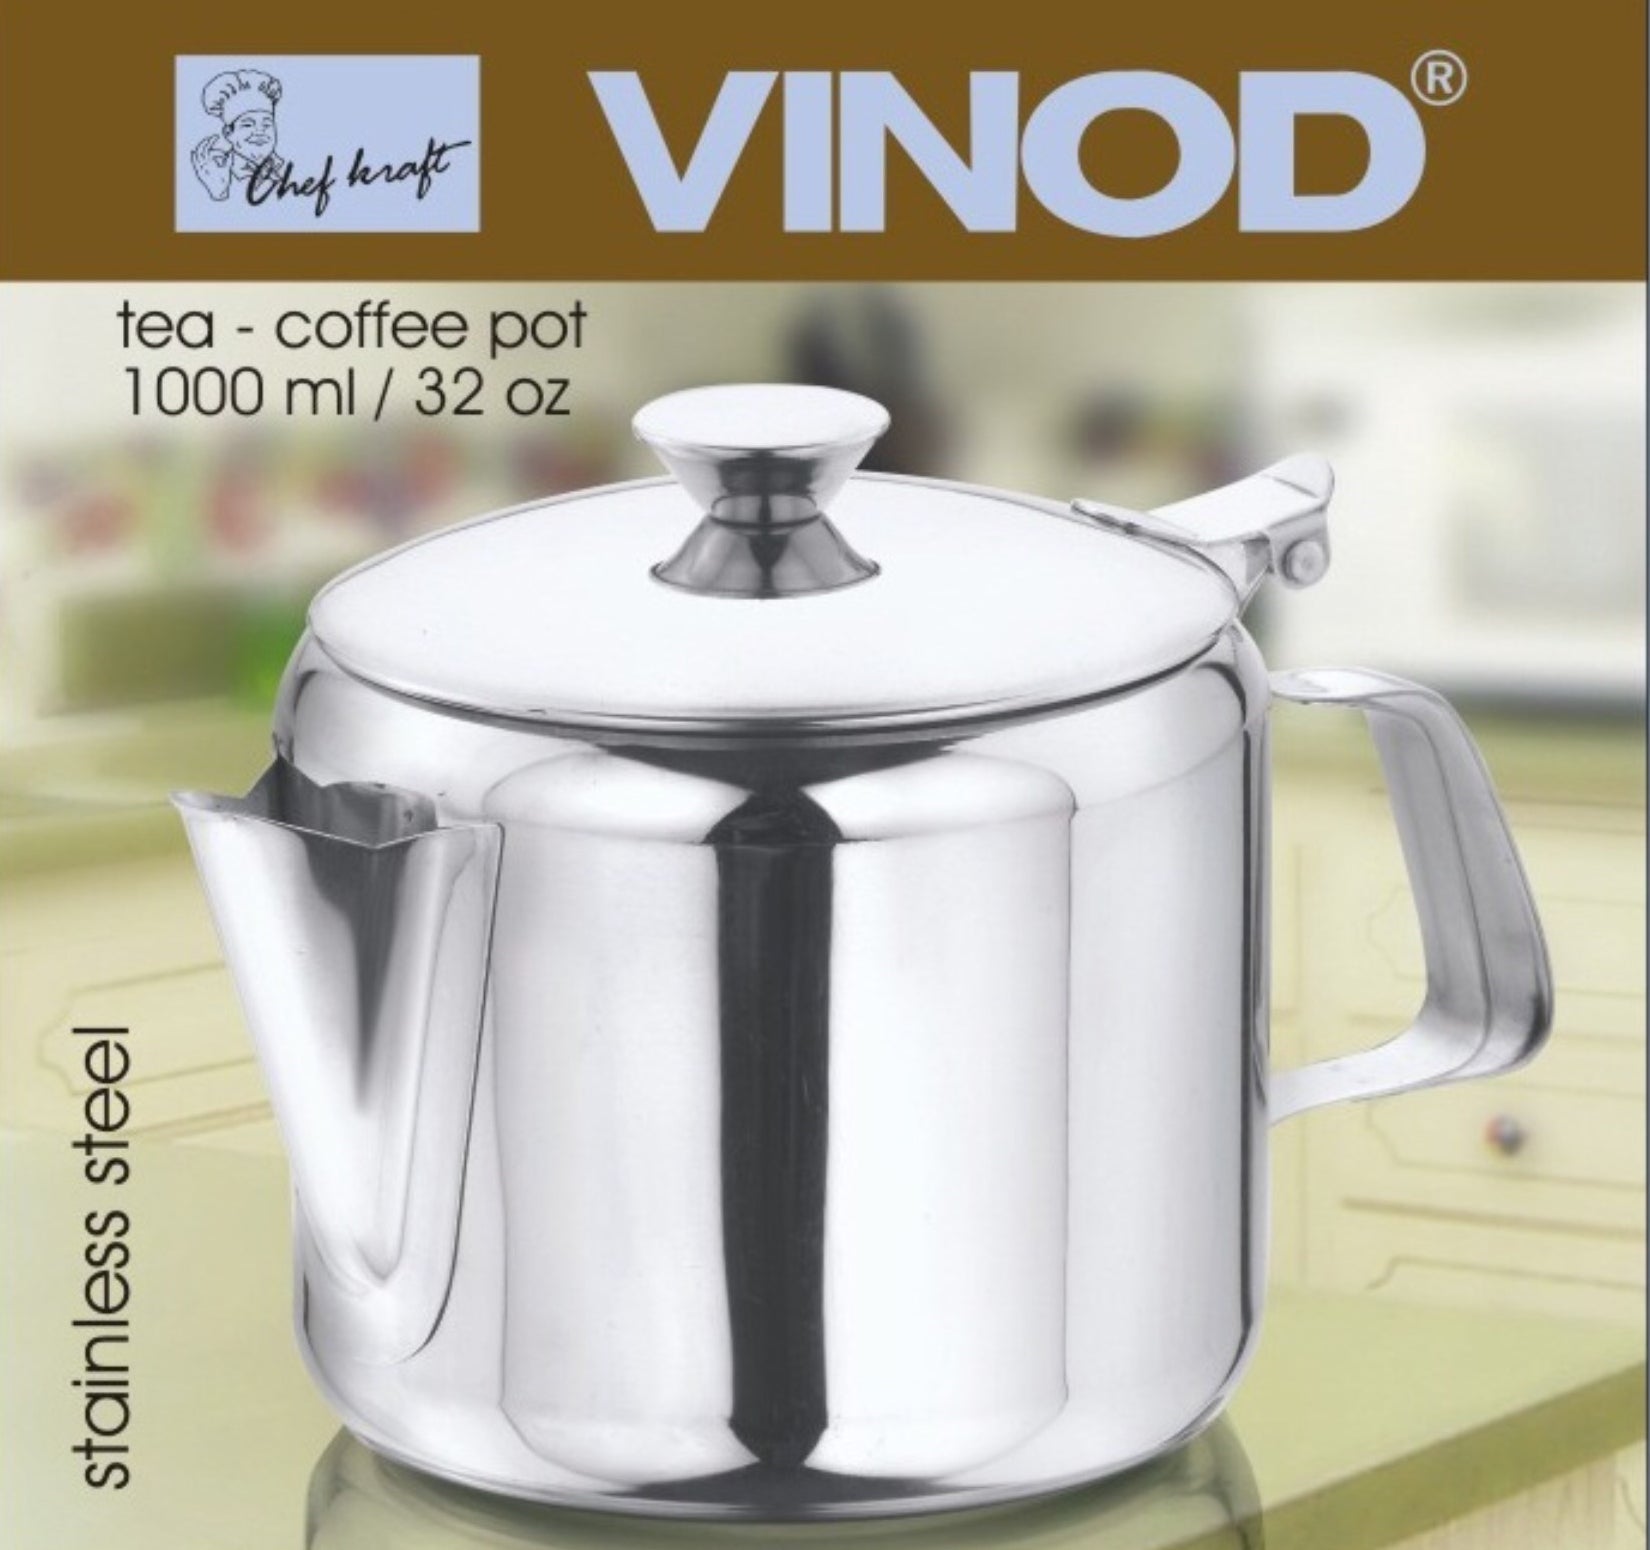 Vinod TPOT-1000 Stainless Steel Tea/Coffee Pot - 1000ml